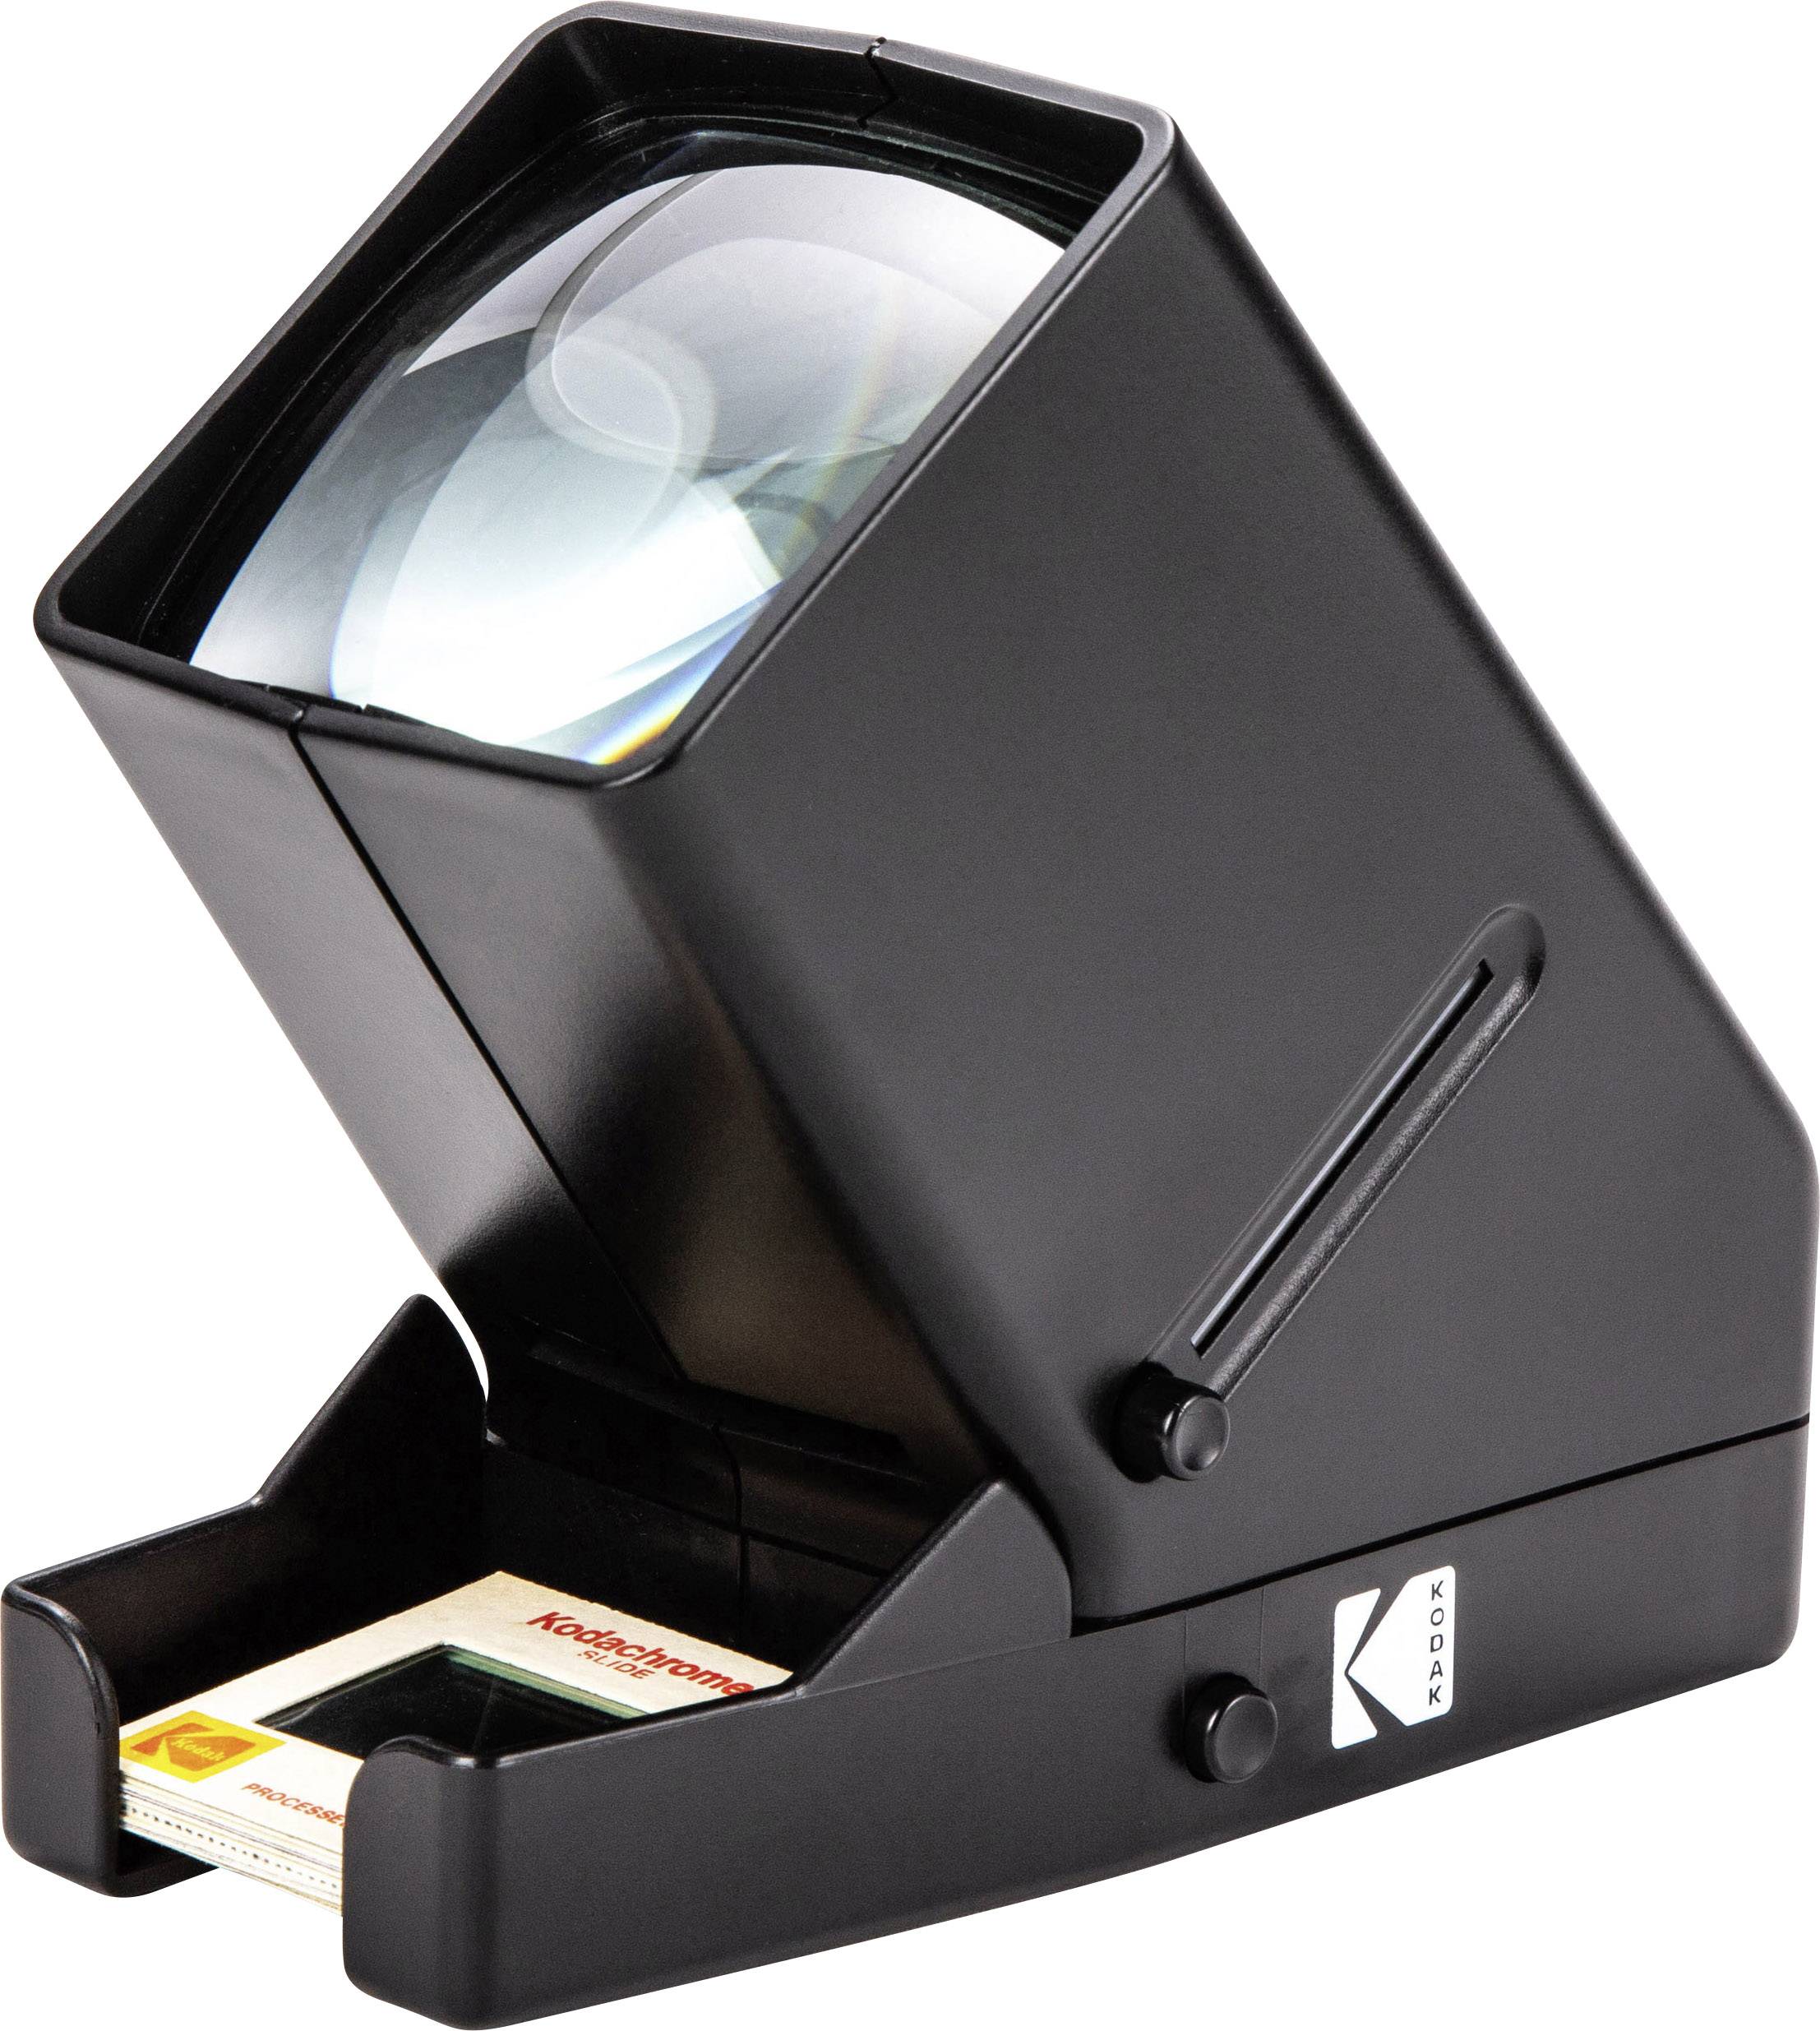 Kodak 35mm Slide Viewer Slide Viewer 3x Magnification Led Lighting